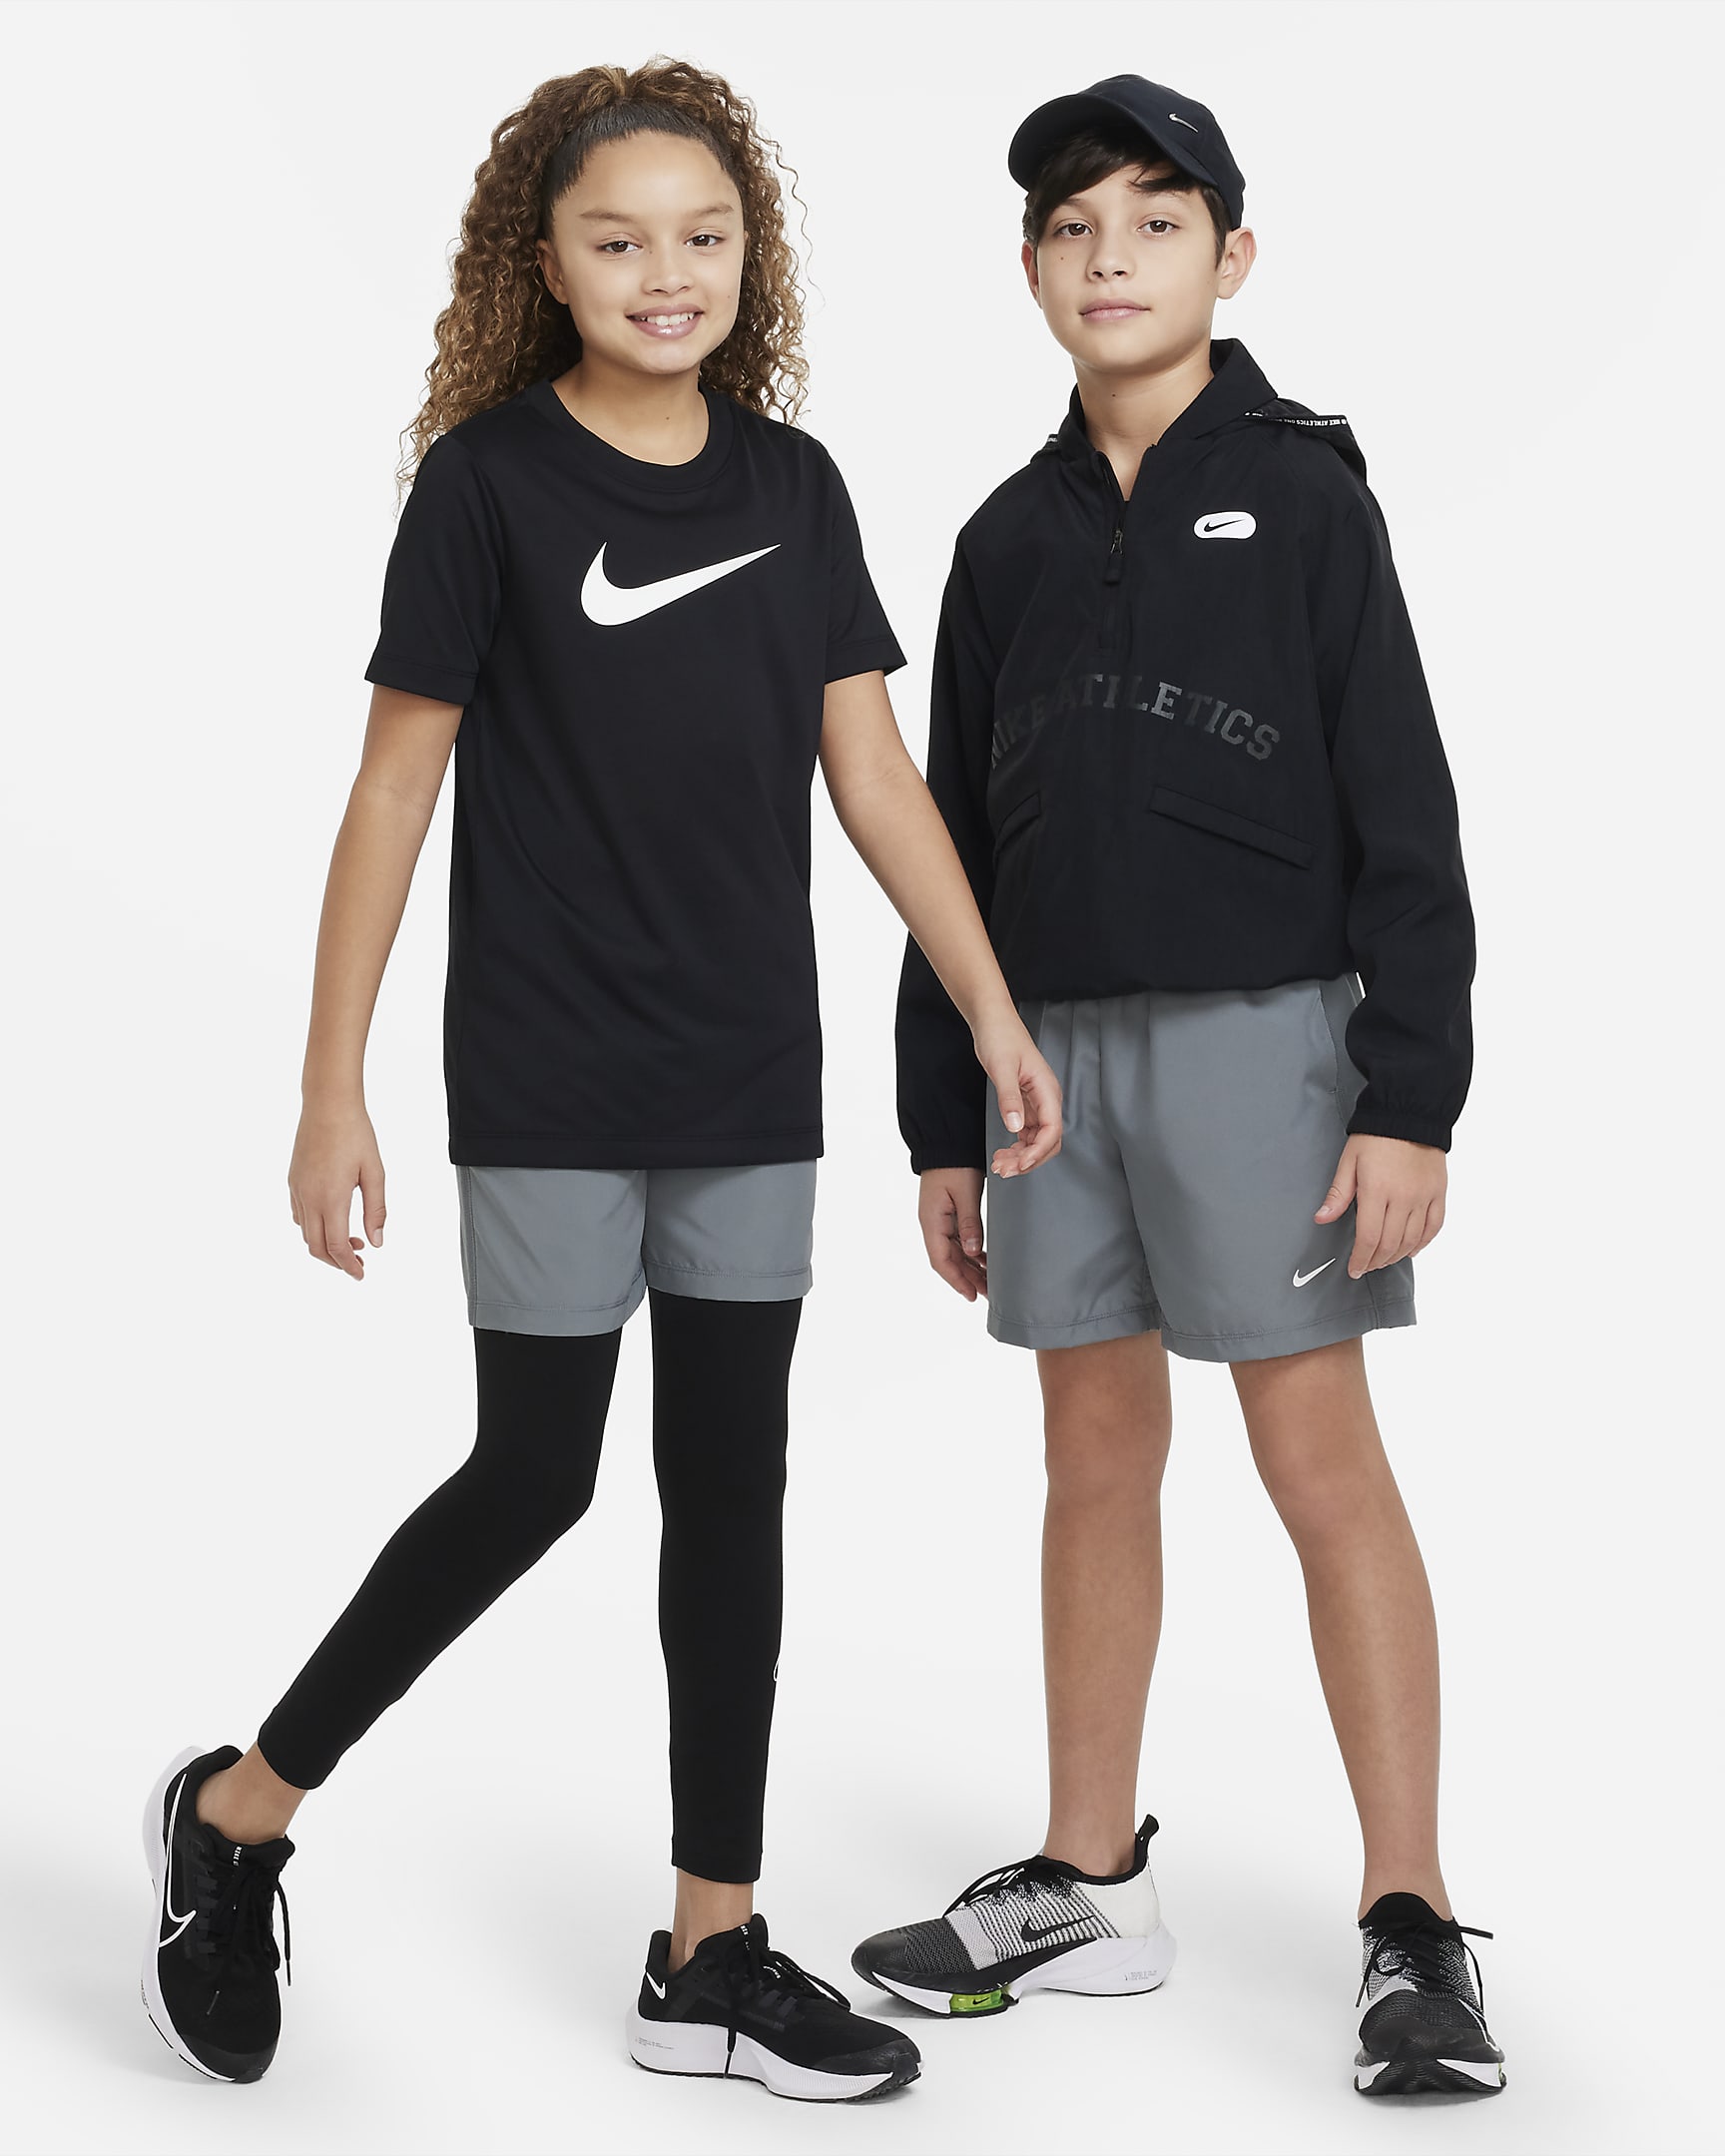 Nike Multi Big Kids' (Boys') Dri-FIT Training Shorts - Smoke Grey/White